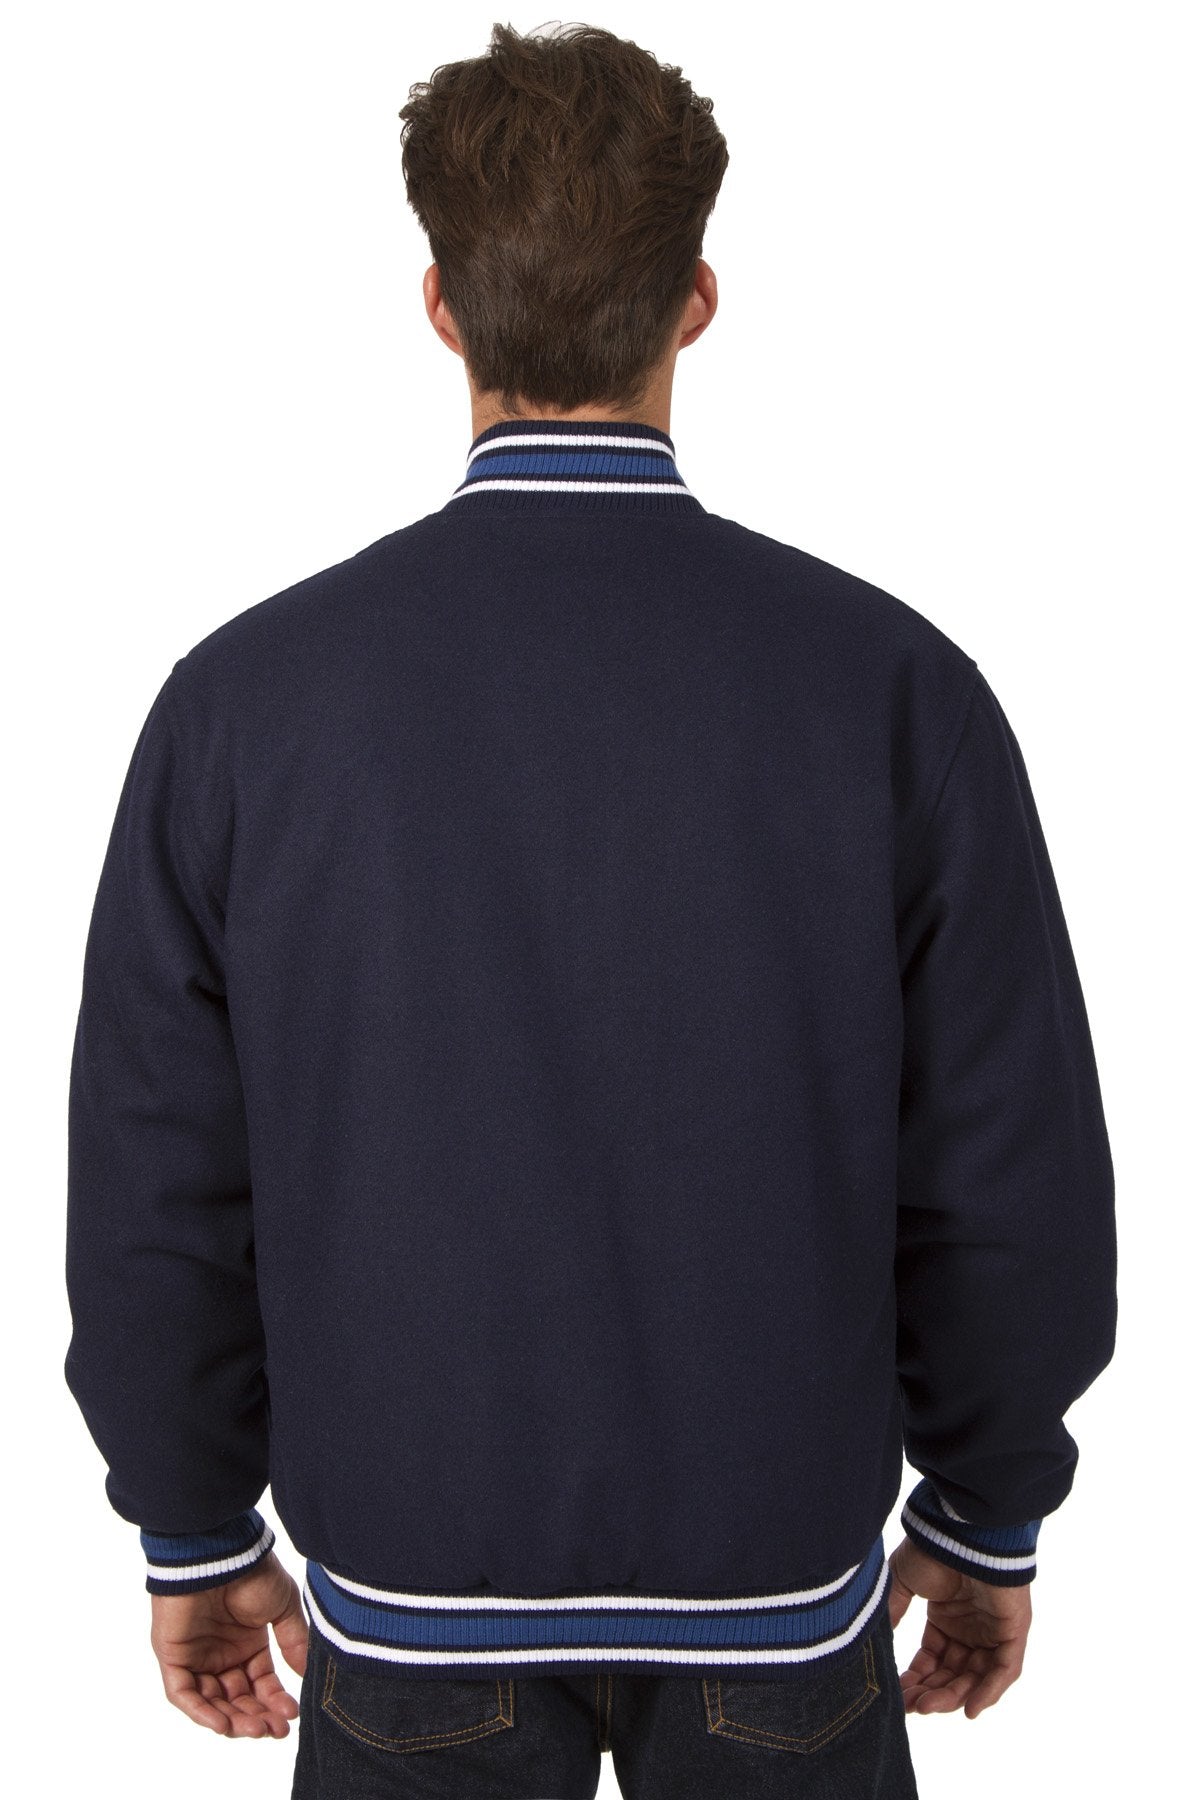 JH Design - All-Wool Varsity Jacket - Reversible - Navy | J.H. Sports